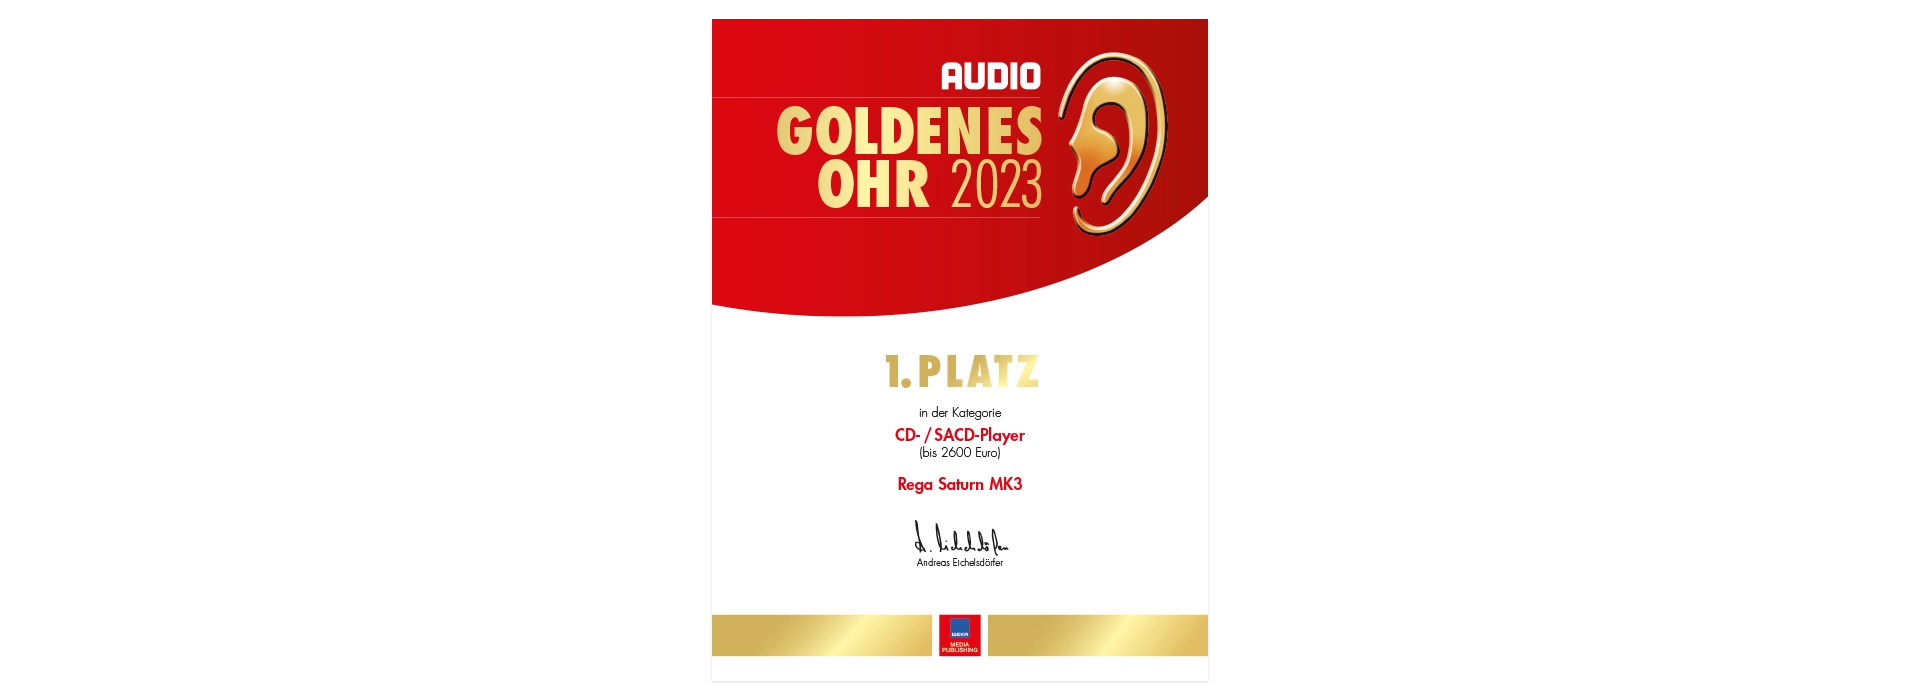 Audio | Goldenes Ohr 2023 | 1. Platz für REGA Saturn MK3